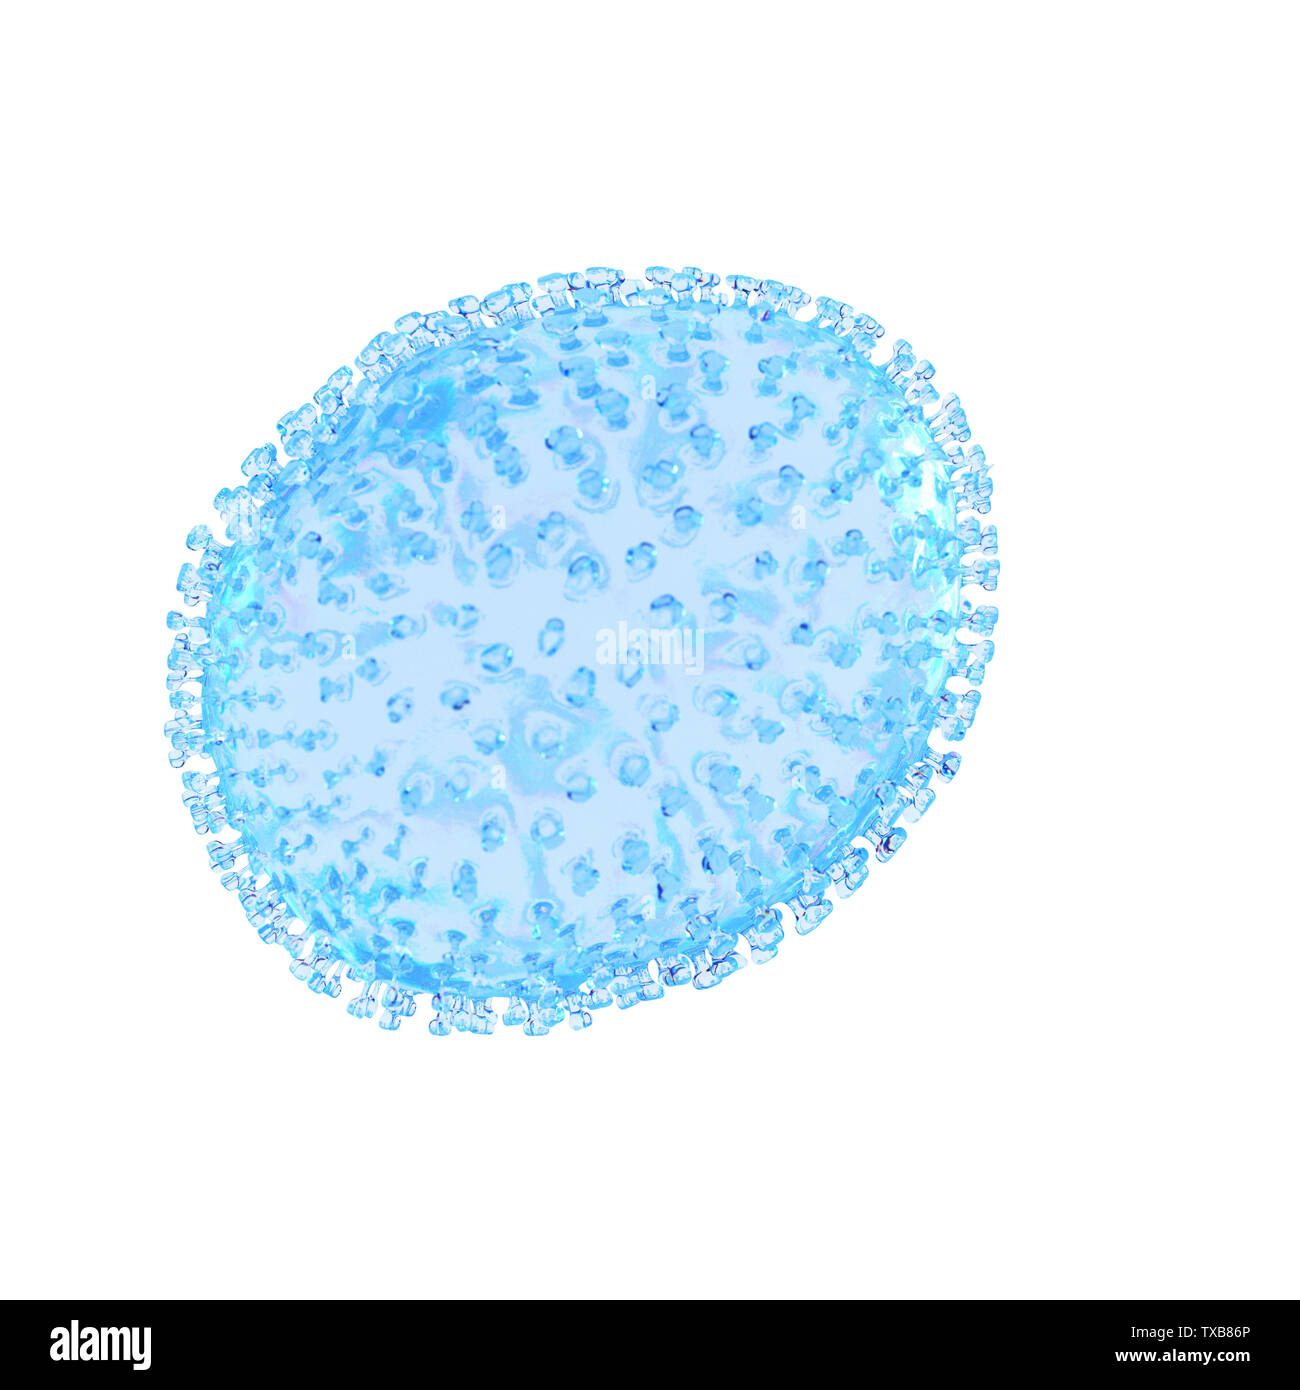 3d rendered illustration of an influenza virus Stock Photo